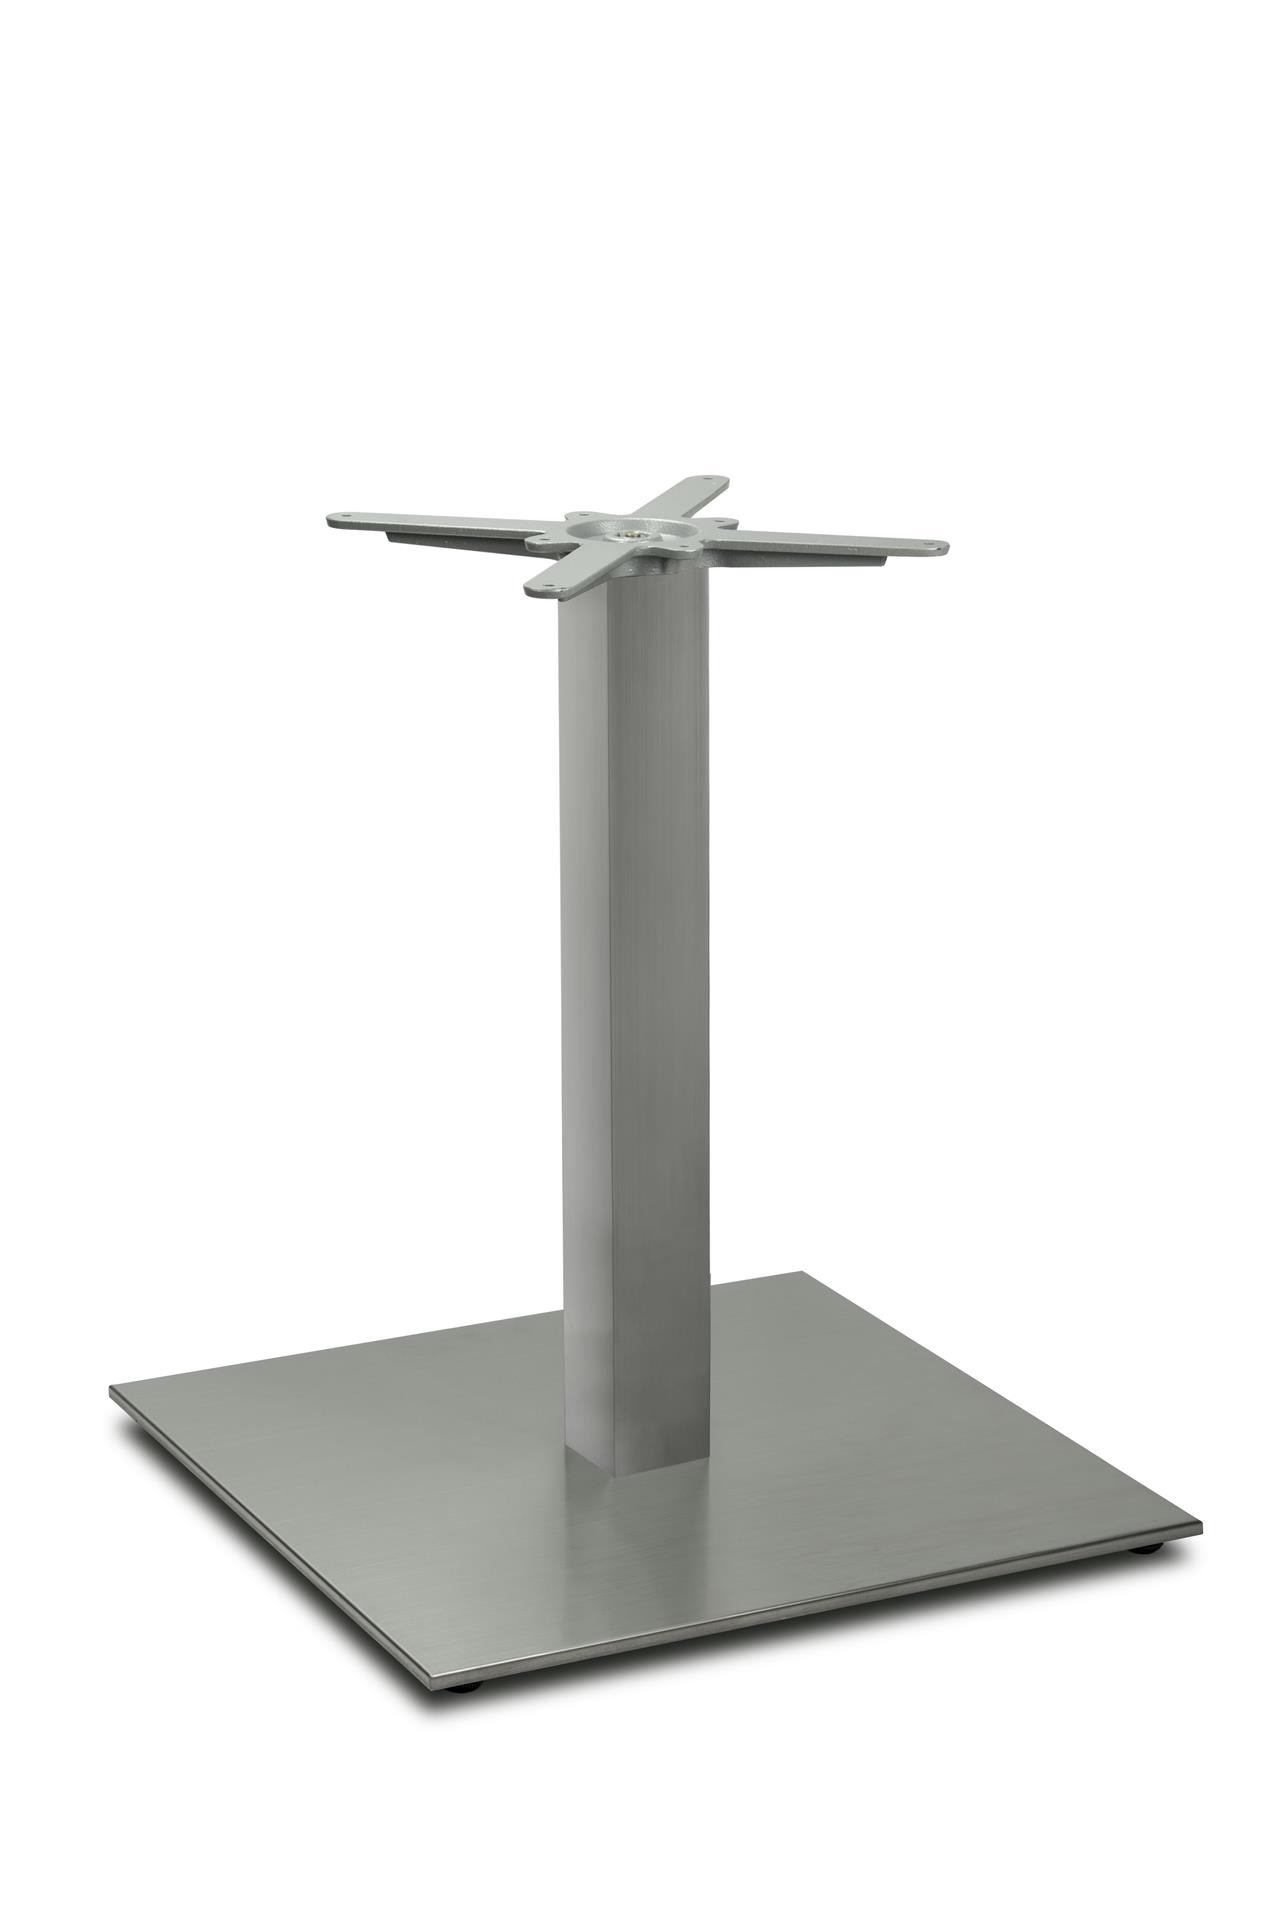 Tischgestell Edelstahl PD7094inox AISI 304 Premium - satiniert - matt